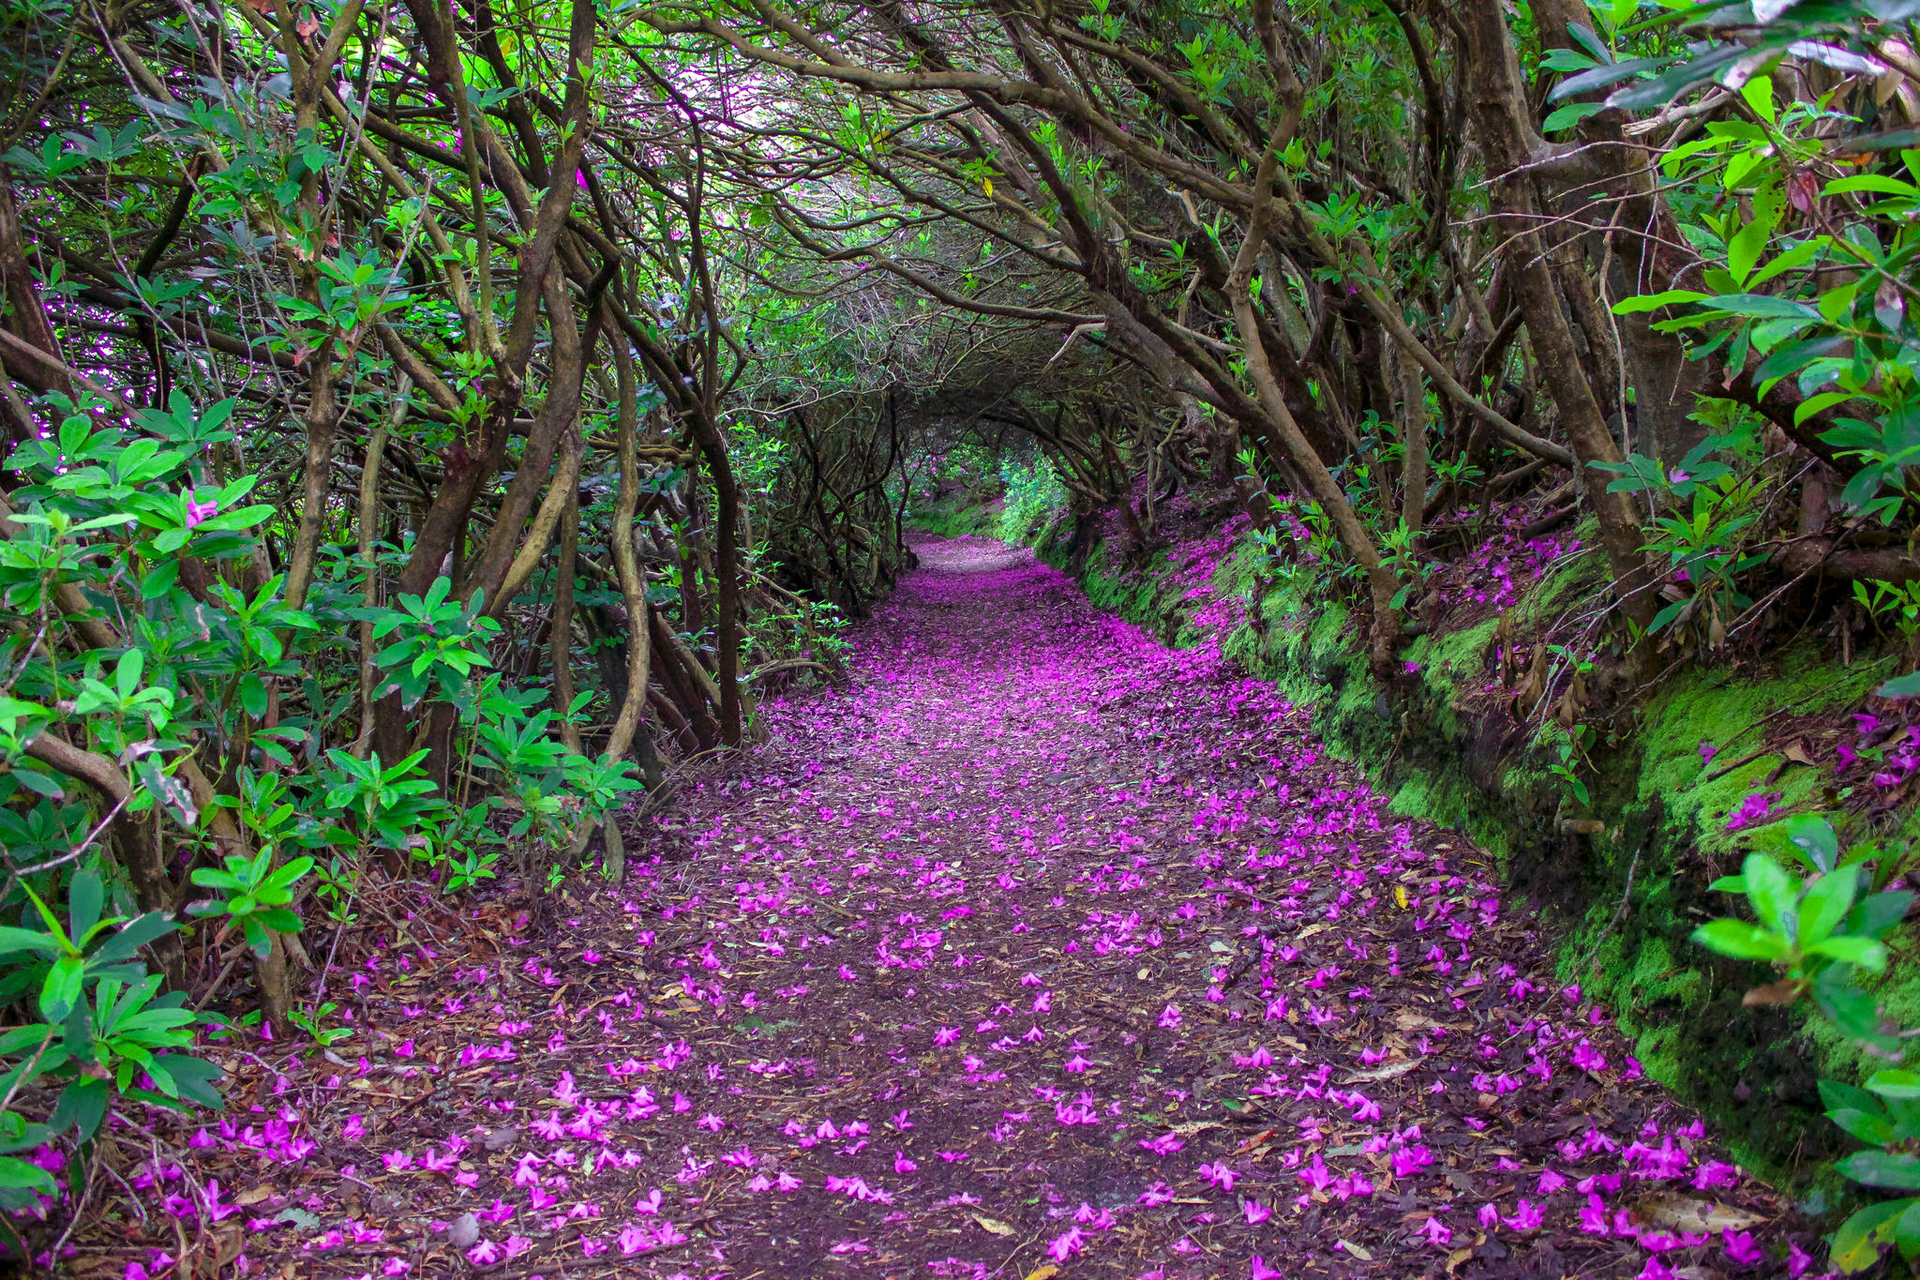 Rhododendron Tunnel, Ireland